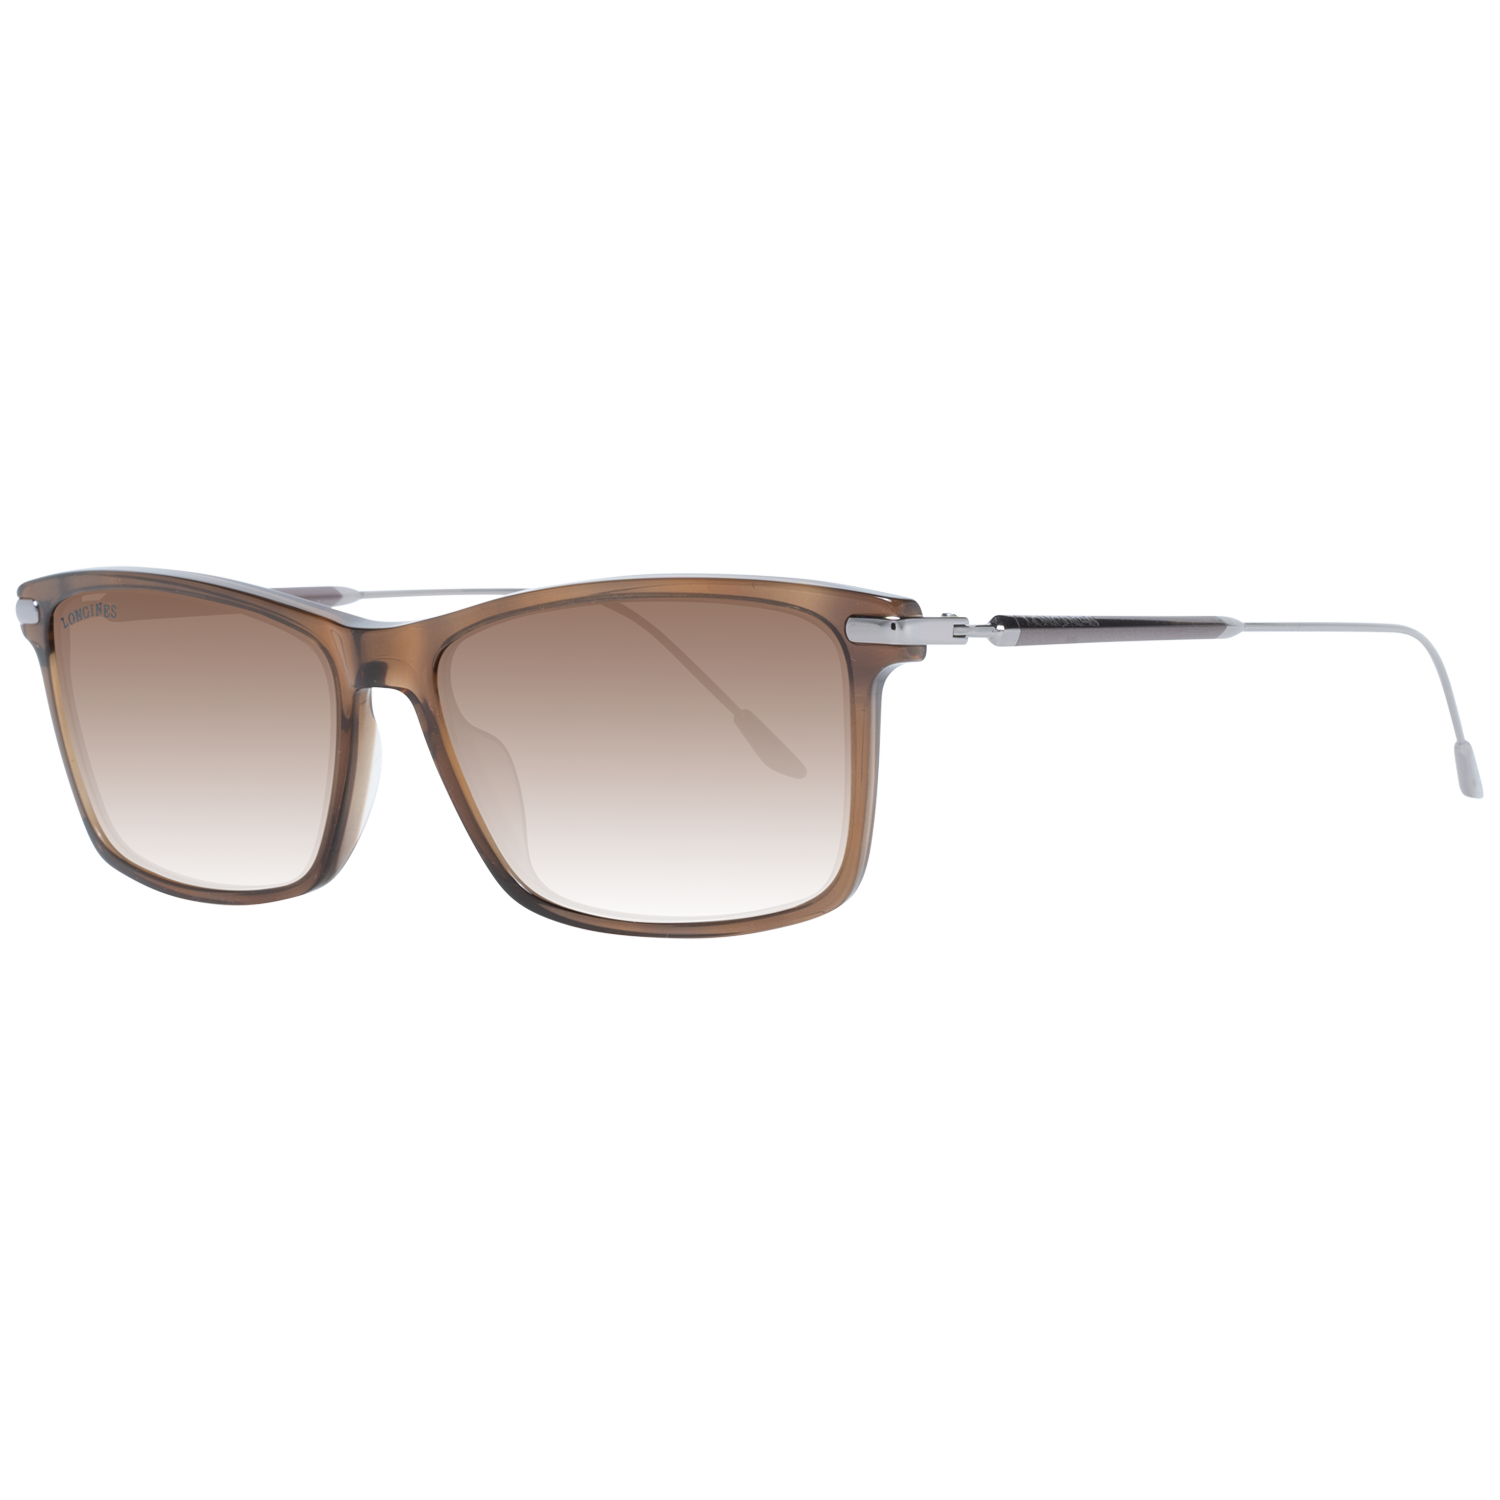 Longines Sunglasses Longines Sunglasses LG0023 56F 58mm Eyeglasses Eyewear UK USA Australia 